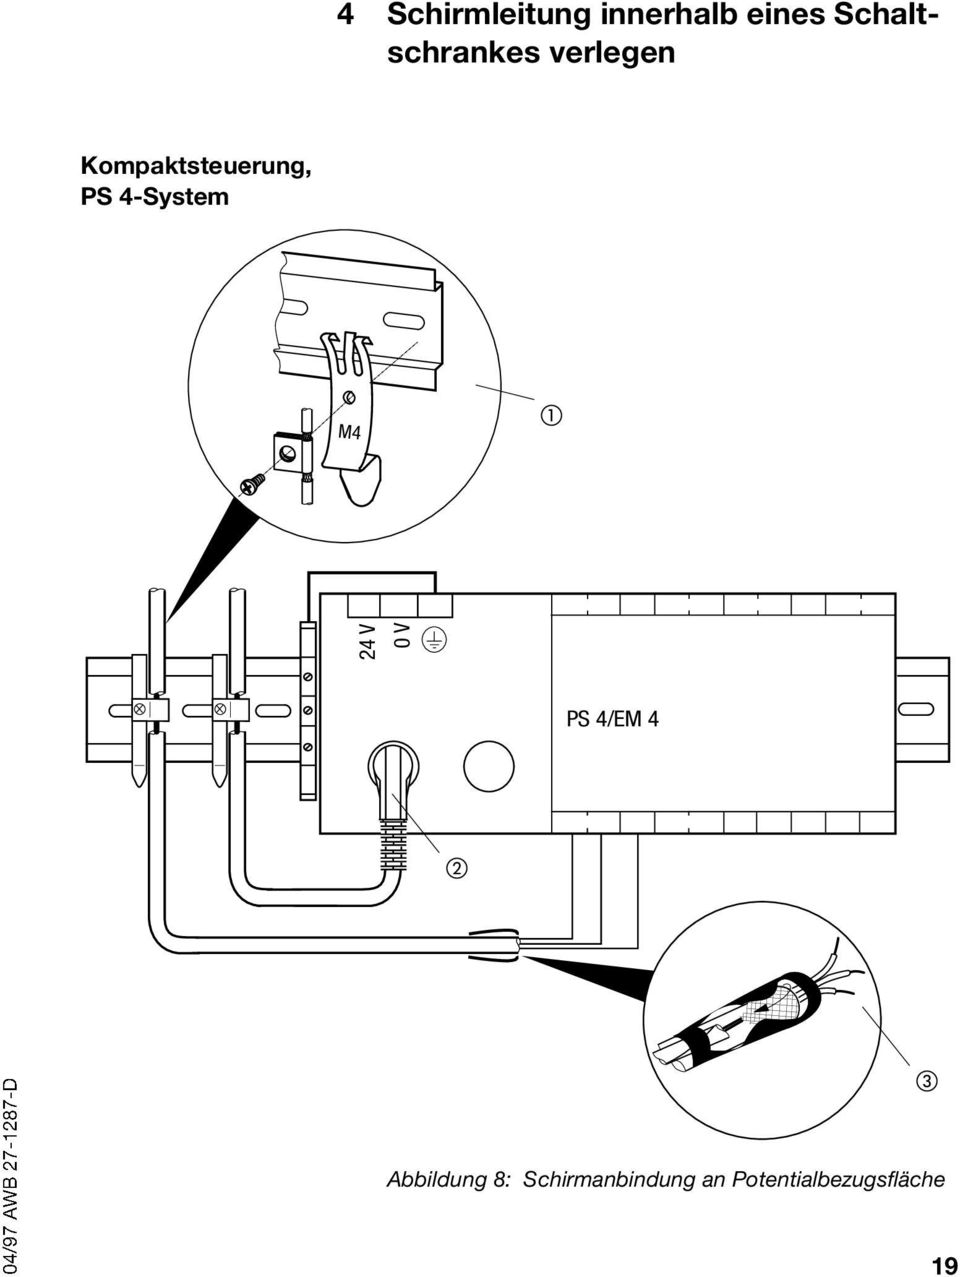 Kompaktsteuerung, PS 4-System M4 24 V 0 V